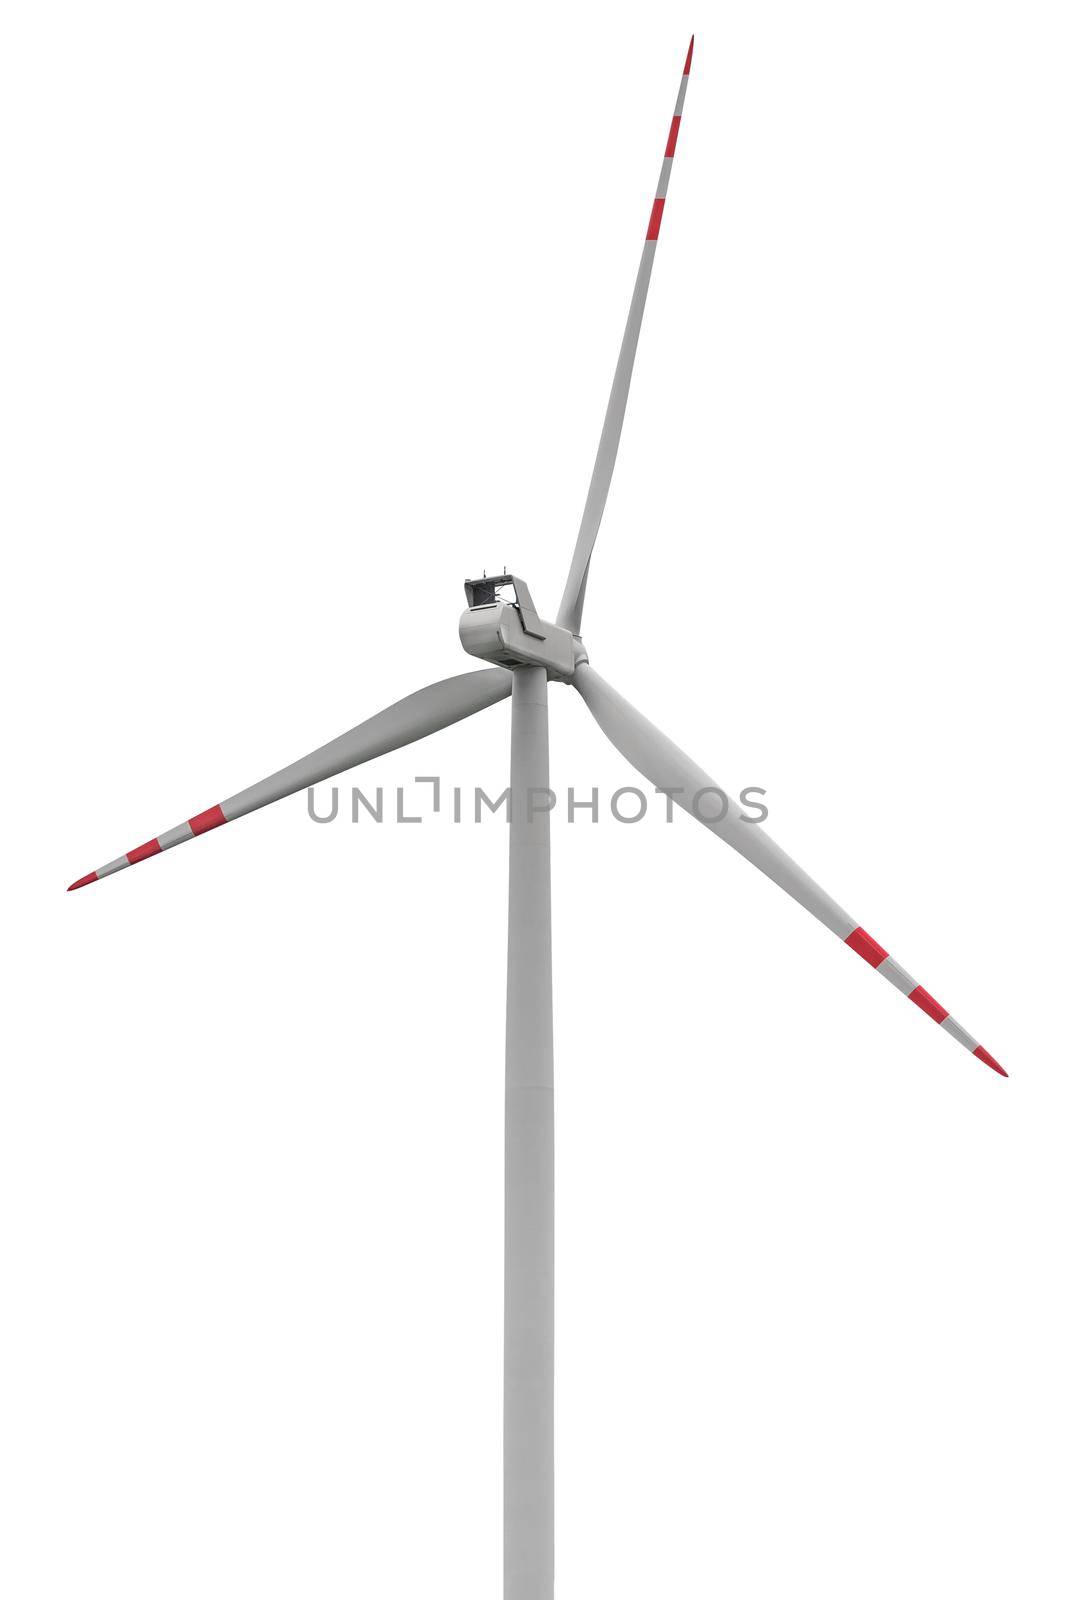 Wind turbine on white background by mkos83